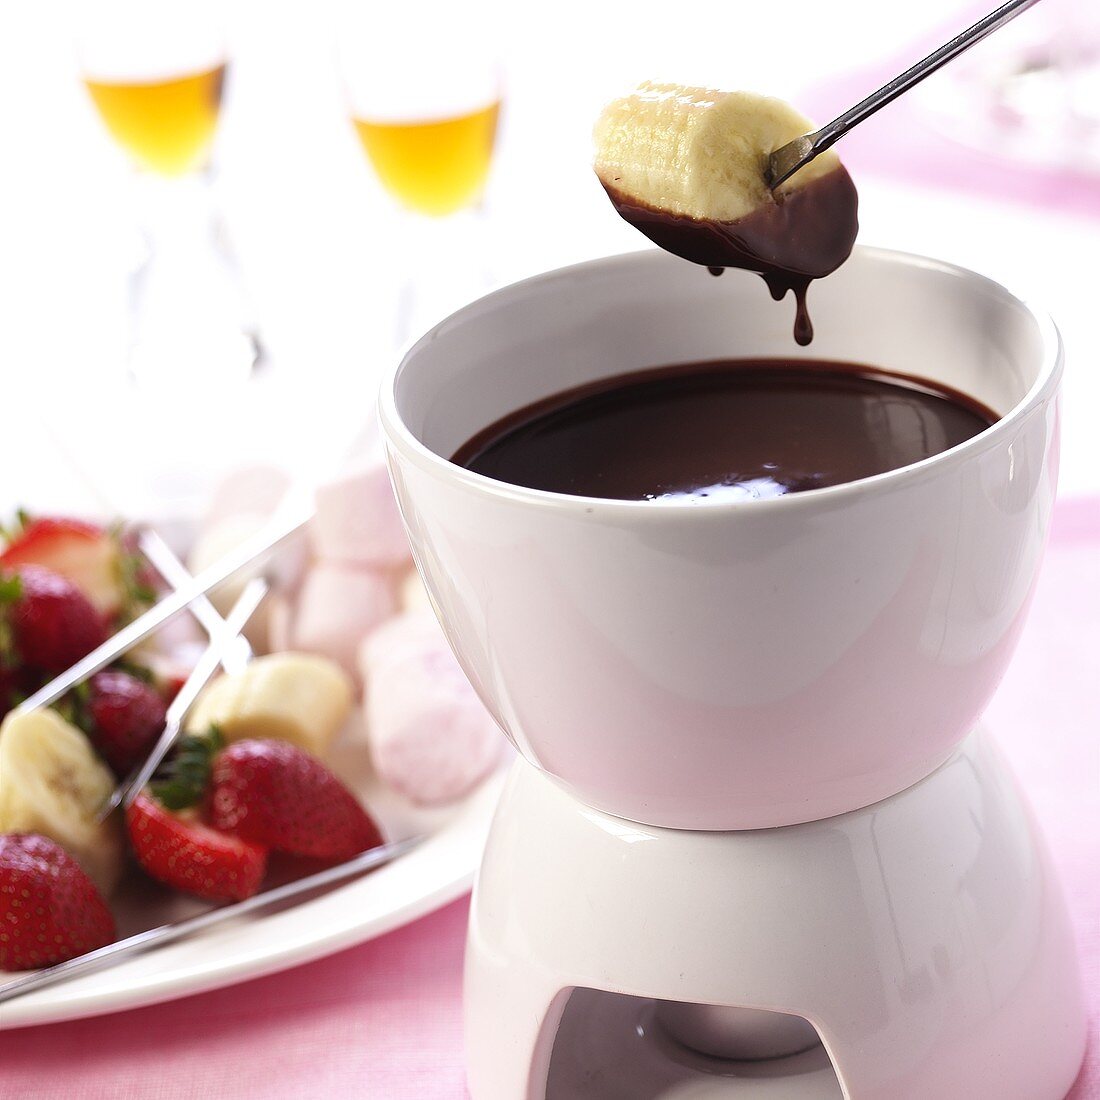 Chocolate fondue with banana